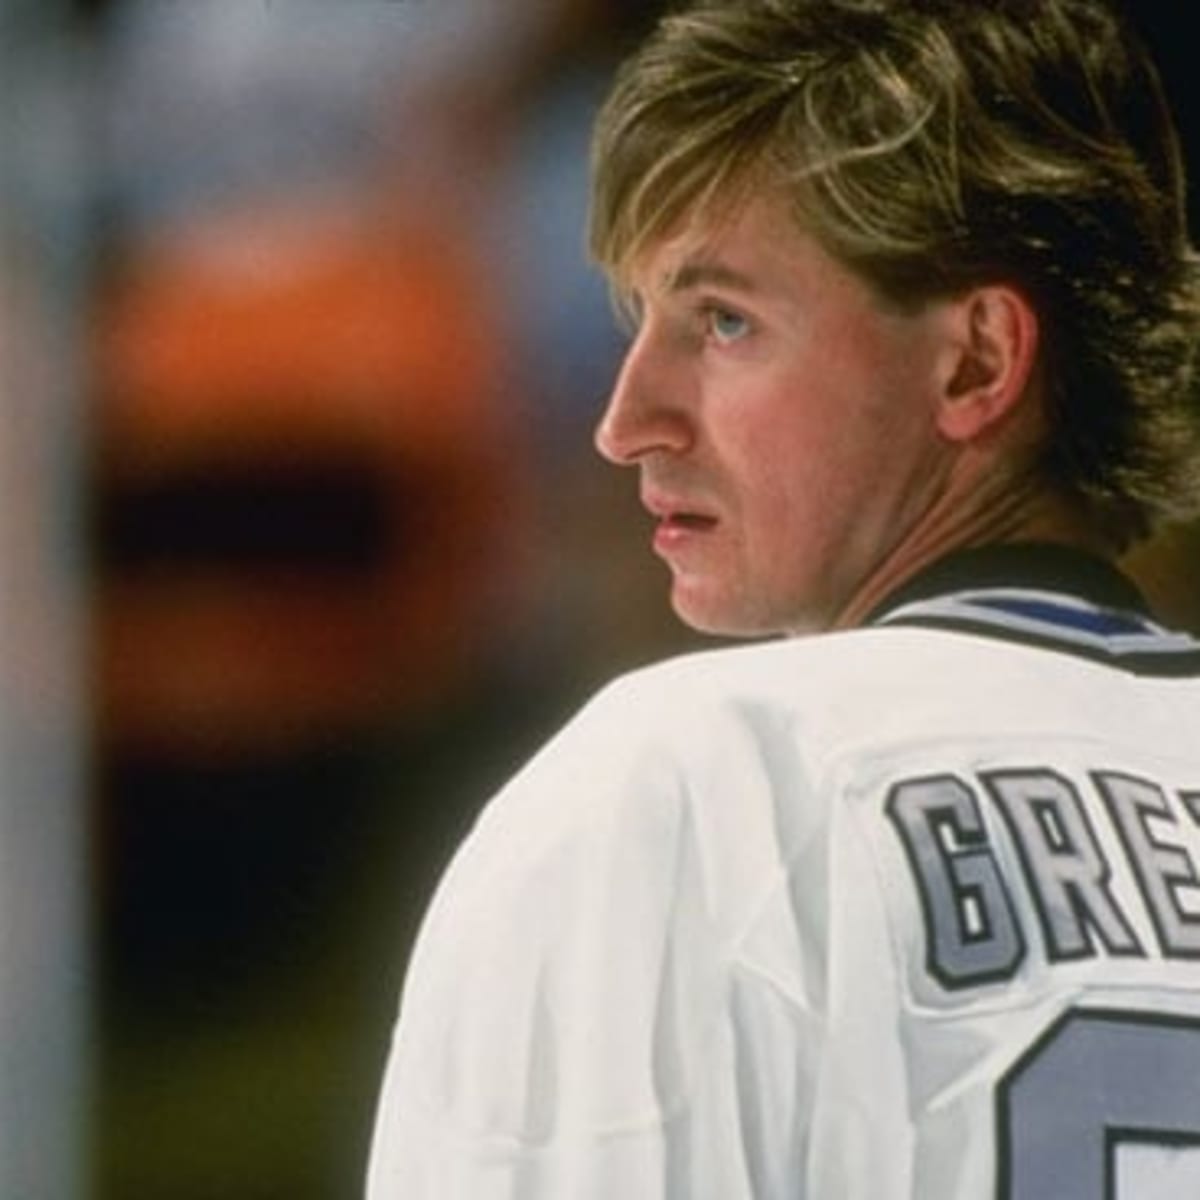 Wayne Gretzky On Hockey History, Dreaming Big And Canadian Pride